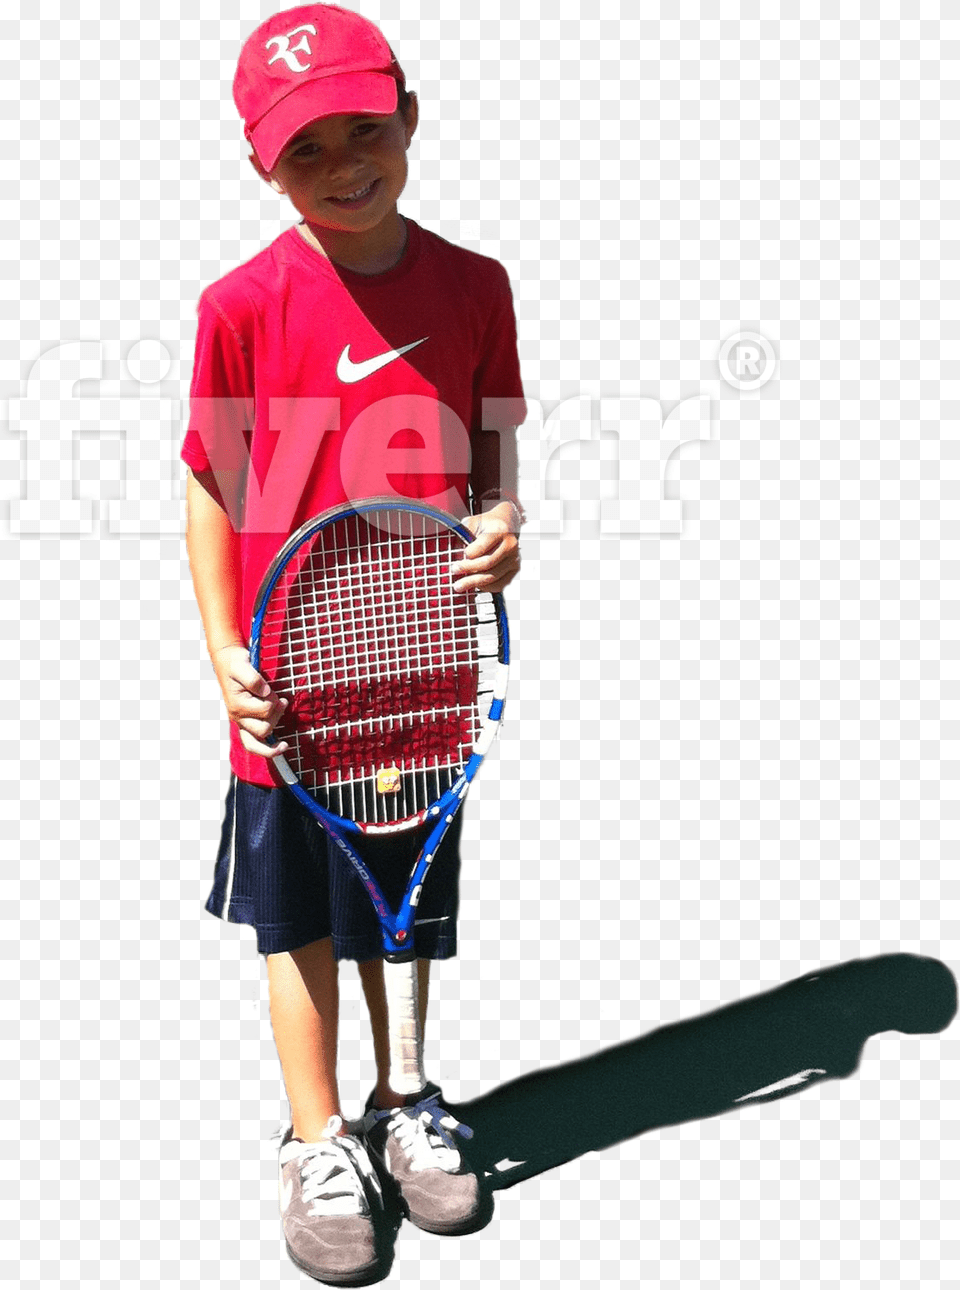 Baseball Player, Tennis Racket, Tennis, Sport, Racket Png Image